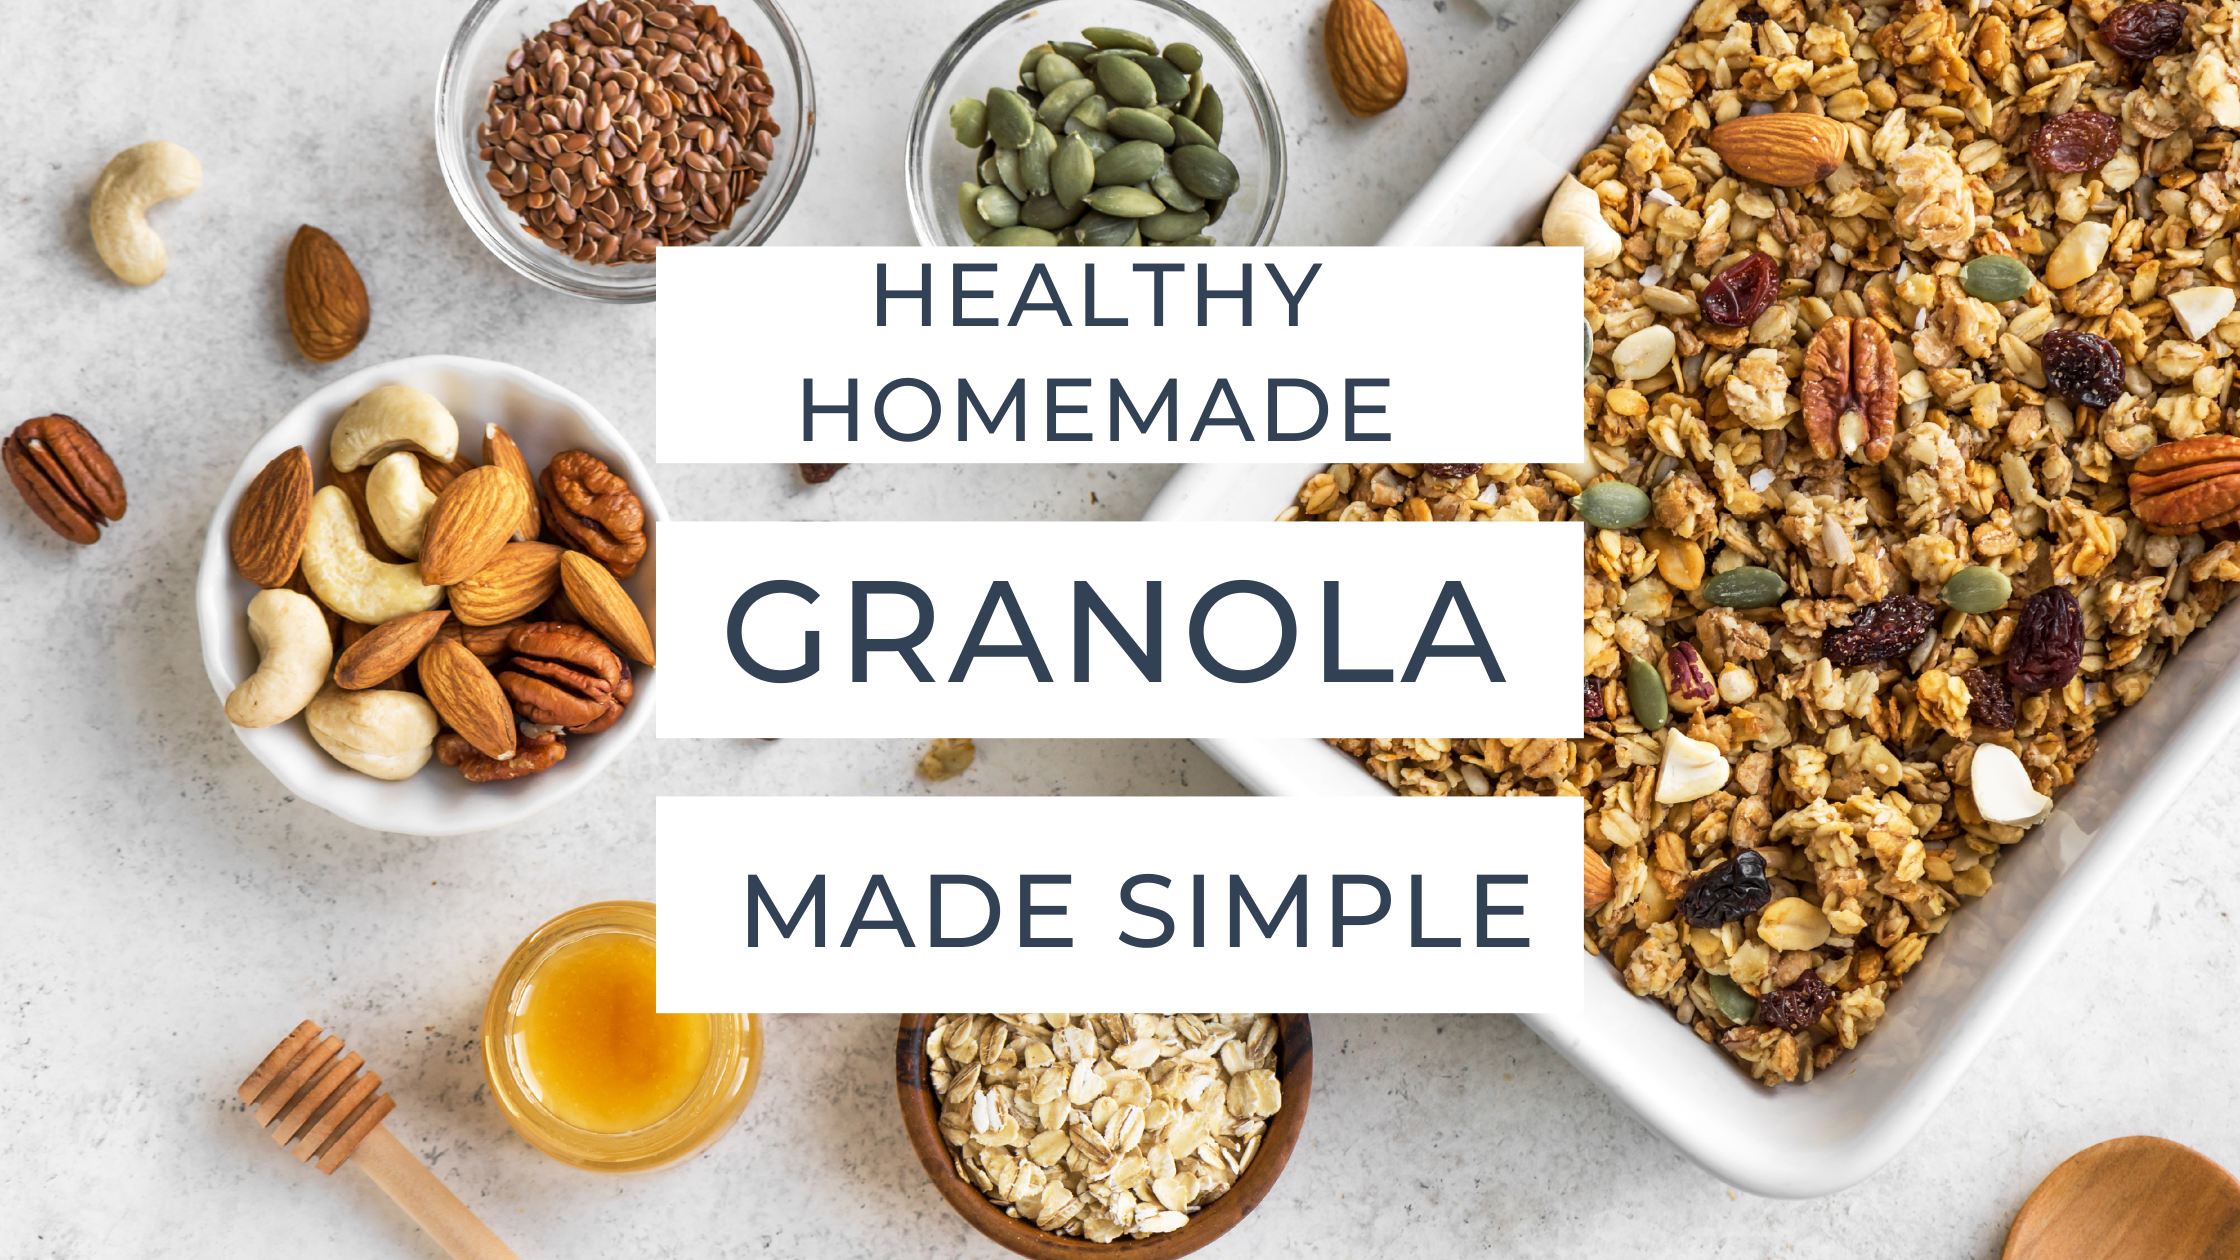 Healthy homemade granola made simple